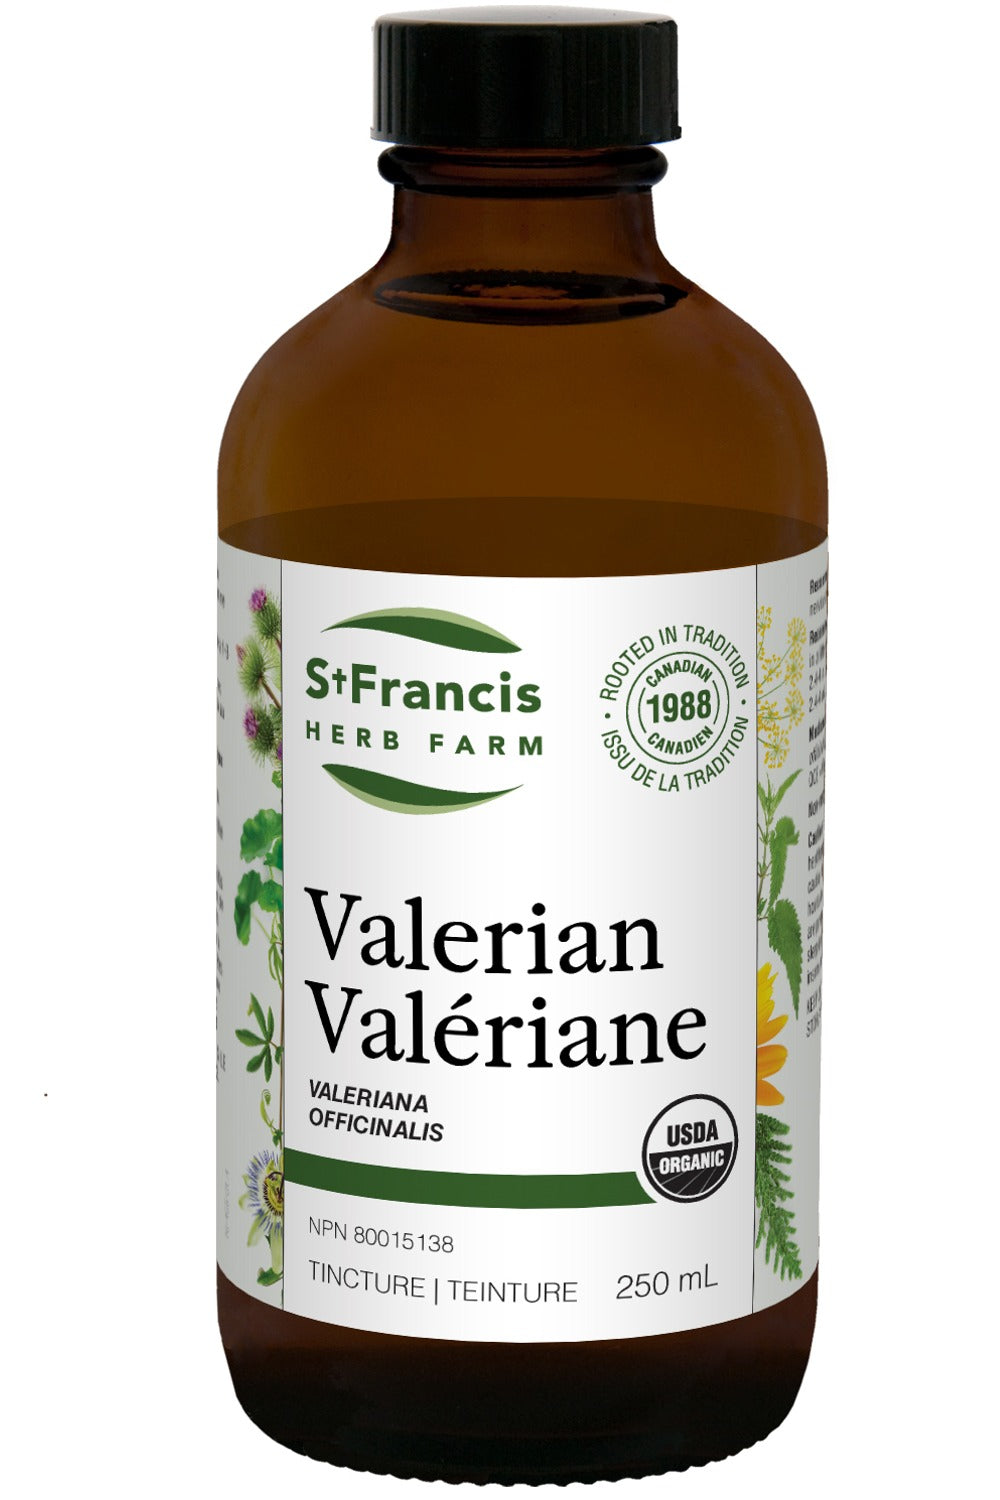 ST FRANCIS HERB FARM Valerian (250 ml)